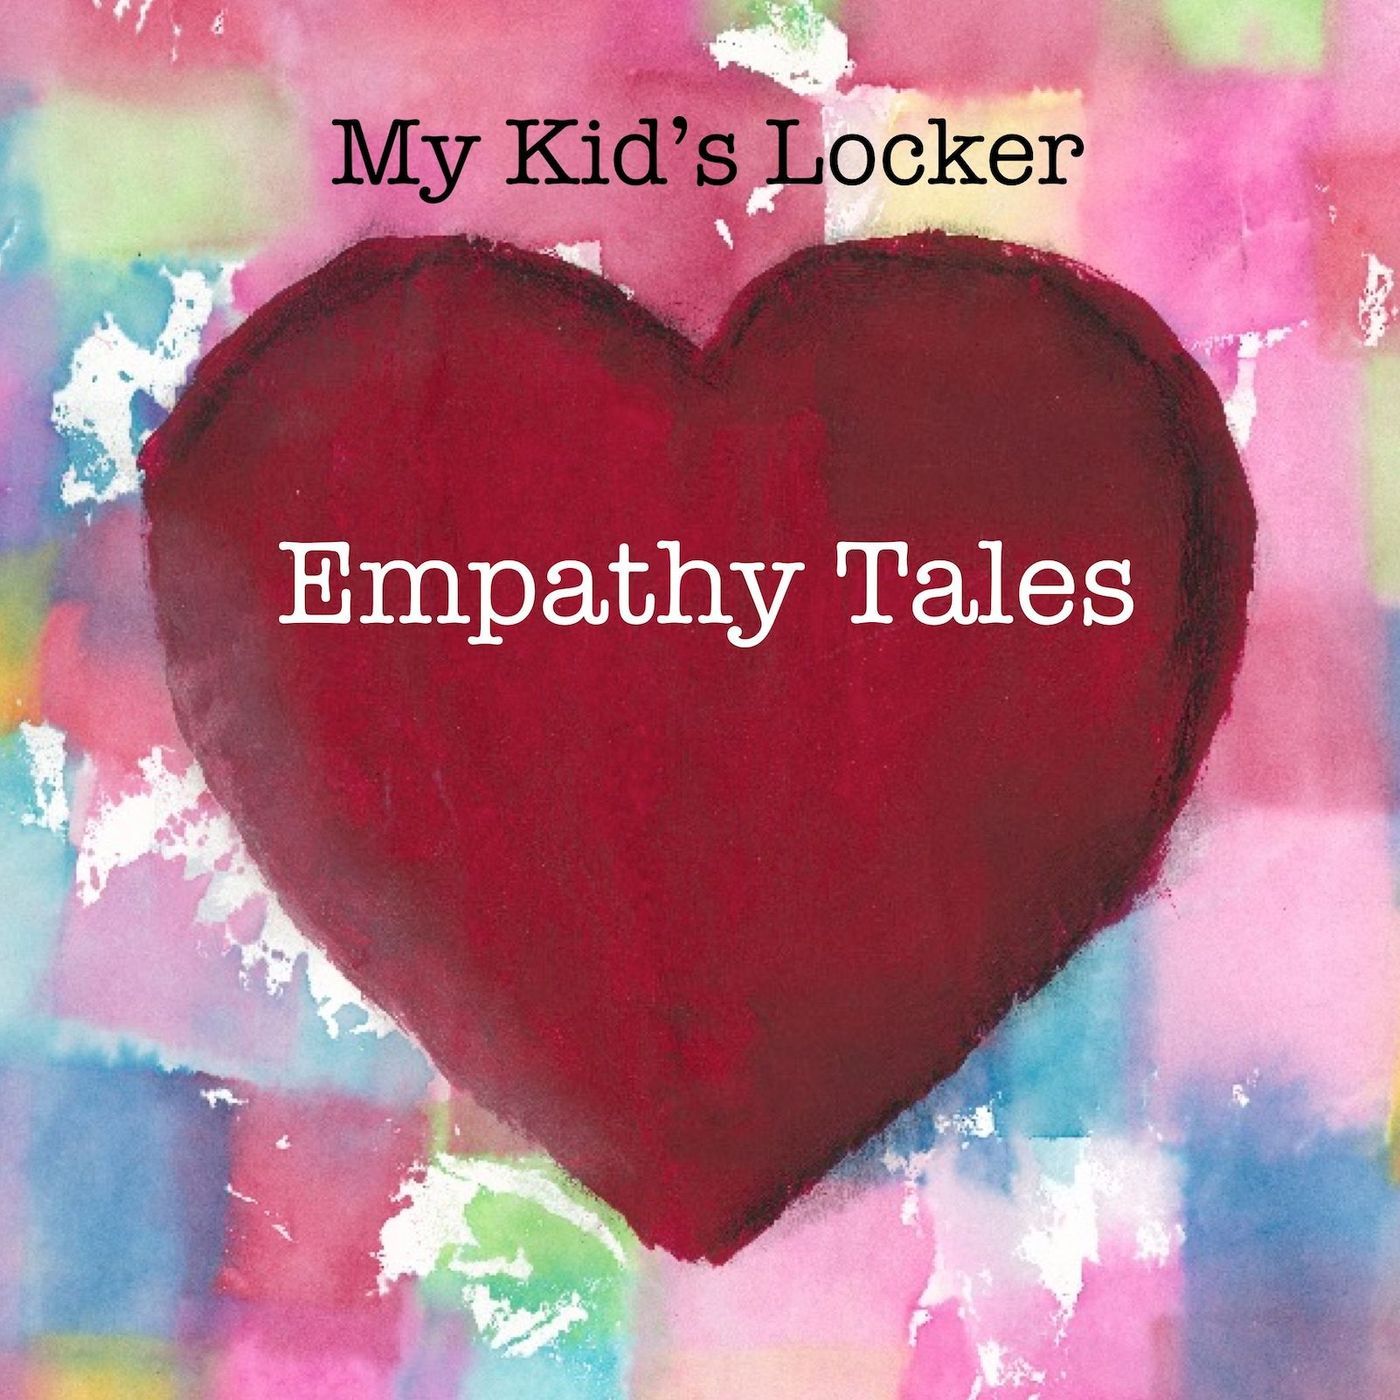 Empathy Tales